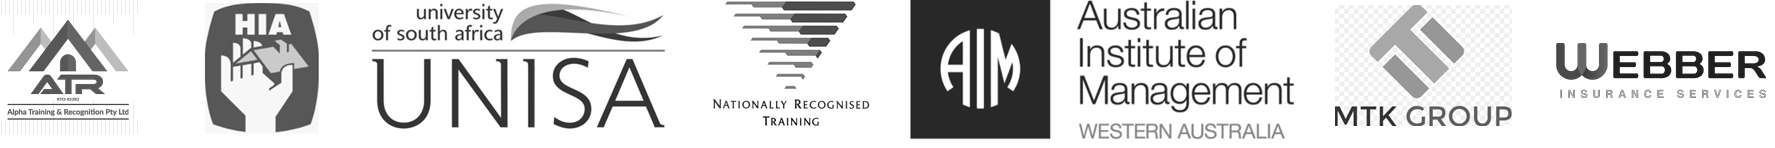 accreditation logos Home